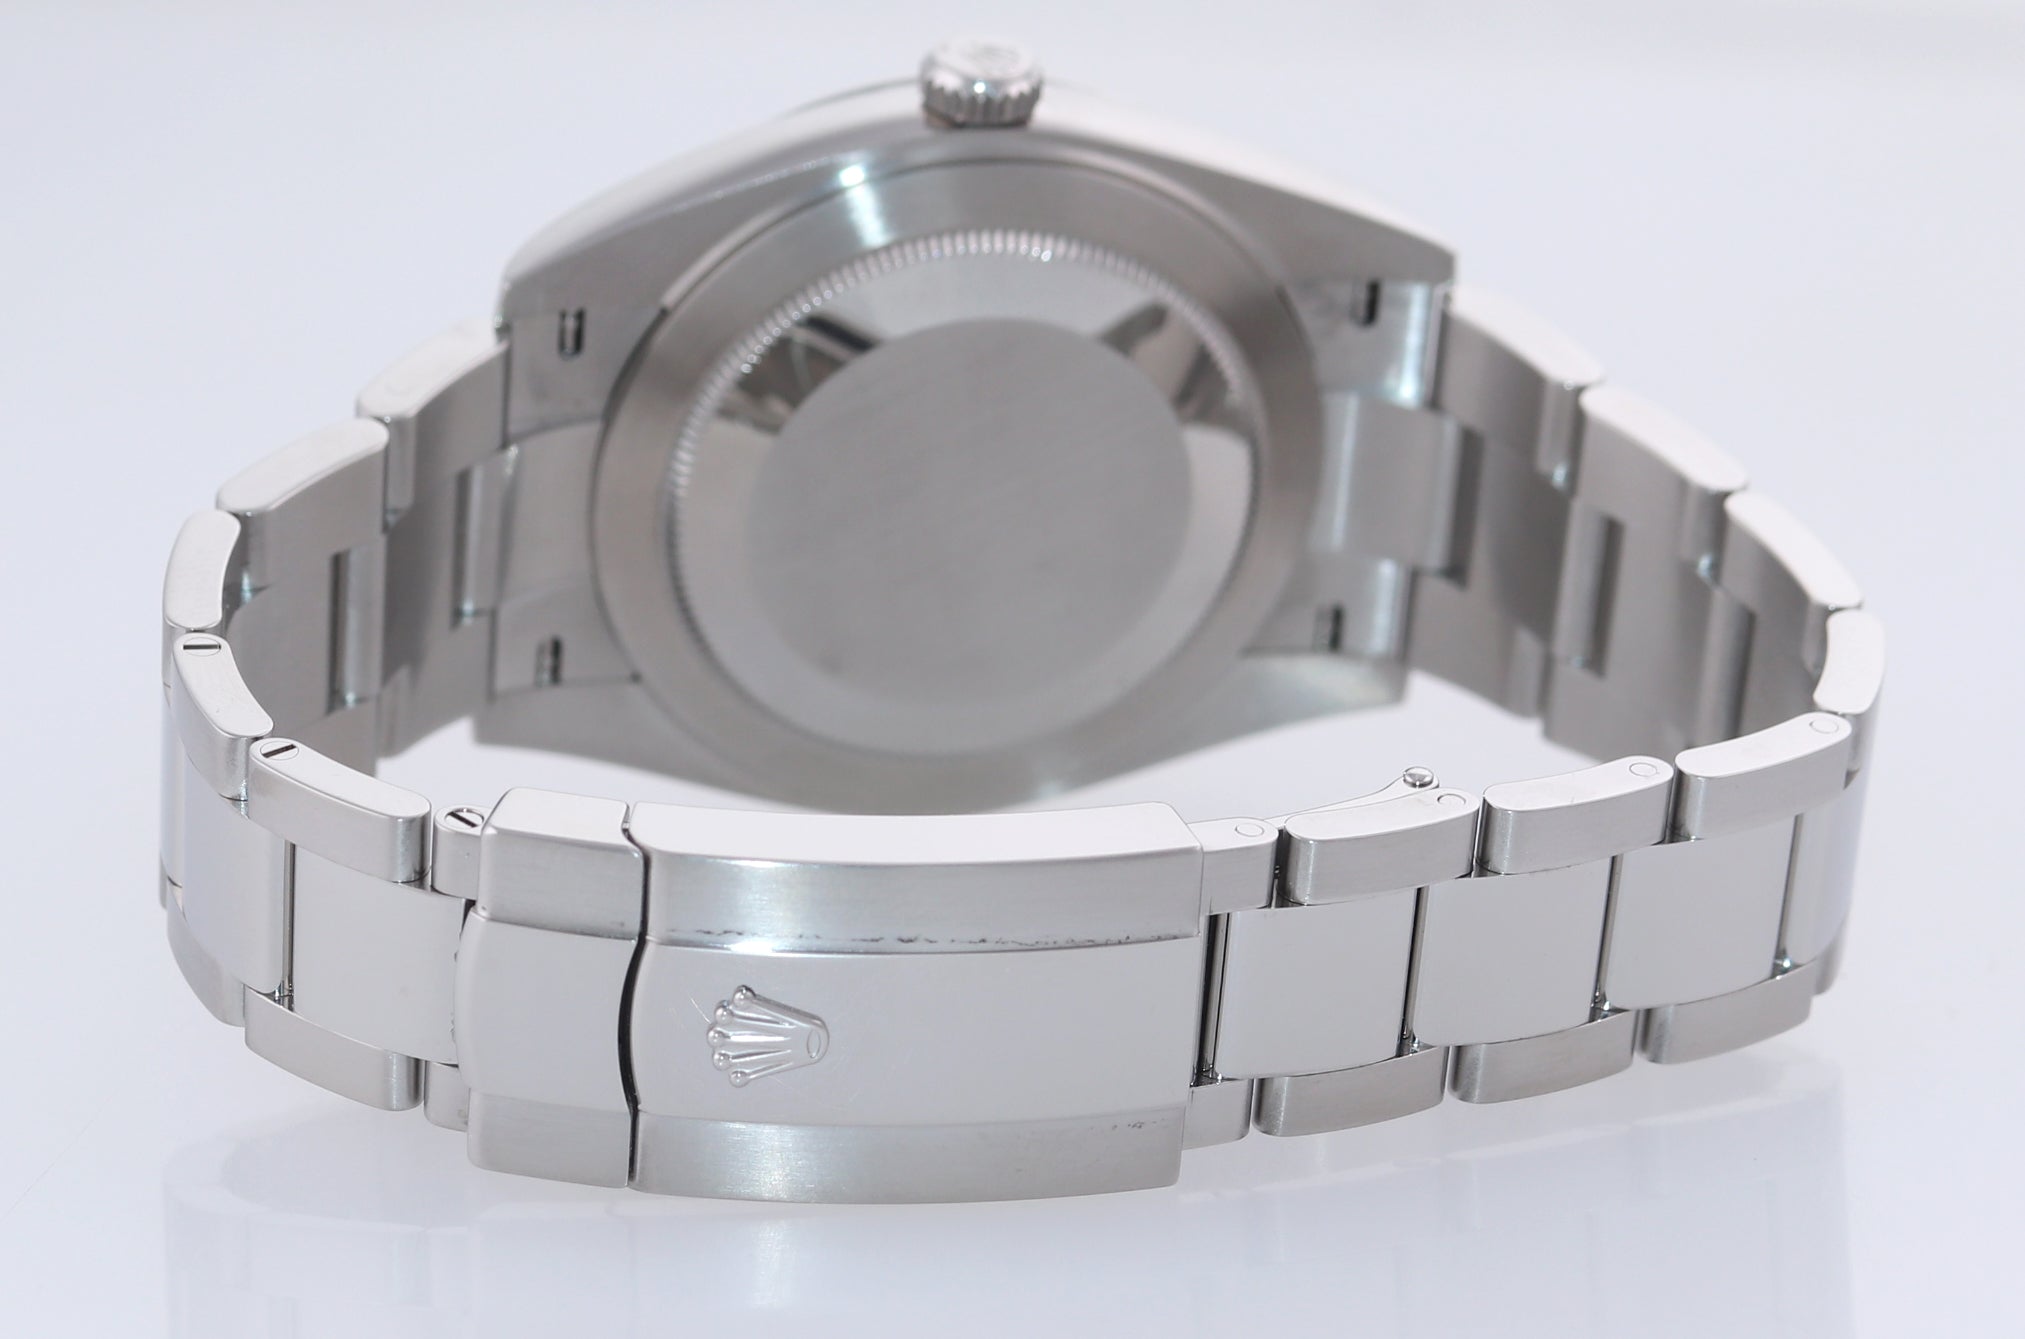 NEW UNWORN PAPERS 2020 Rolex DateJust 41 Steel 126300 Silver Oyster 41mm Watch